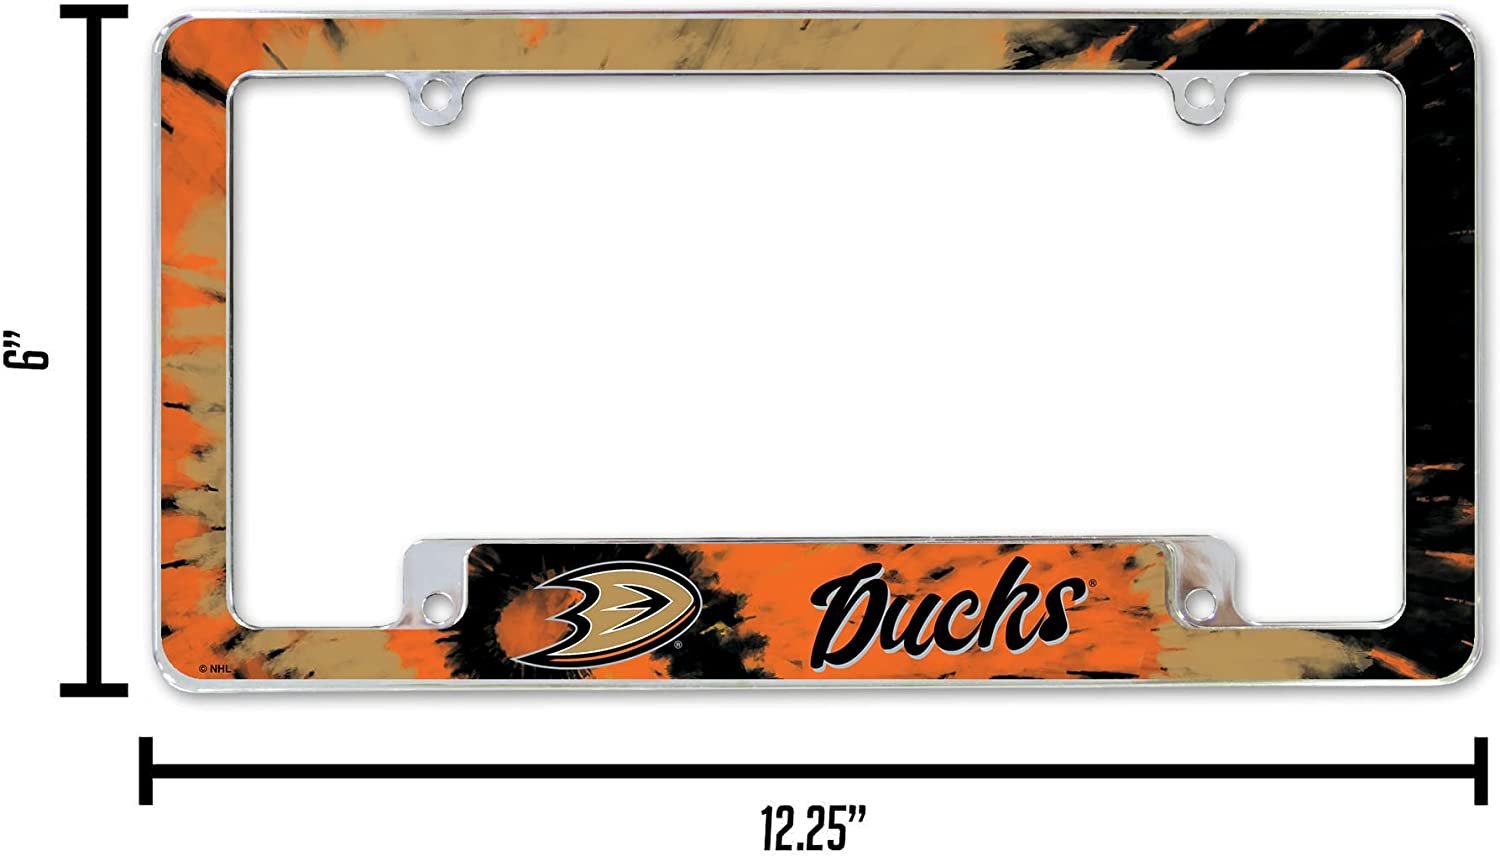 Anaheim Ducks Metal License Plate Frame Chrome Tag Cover Tie Dye Design 6x12 Inch